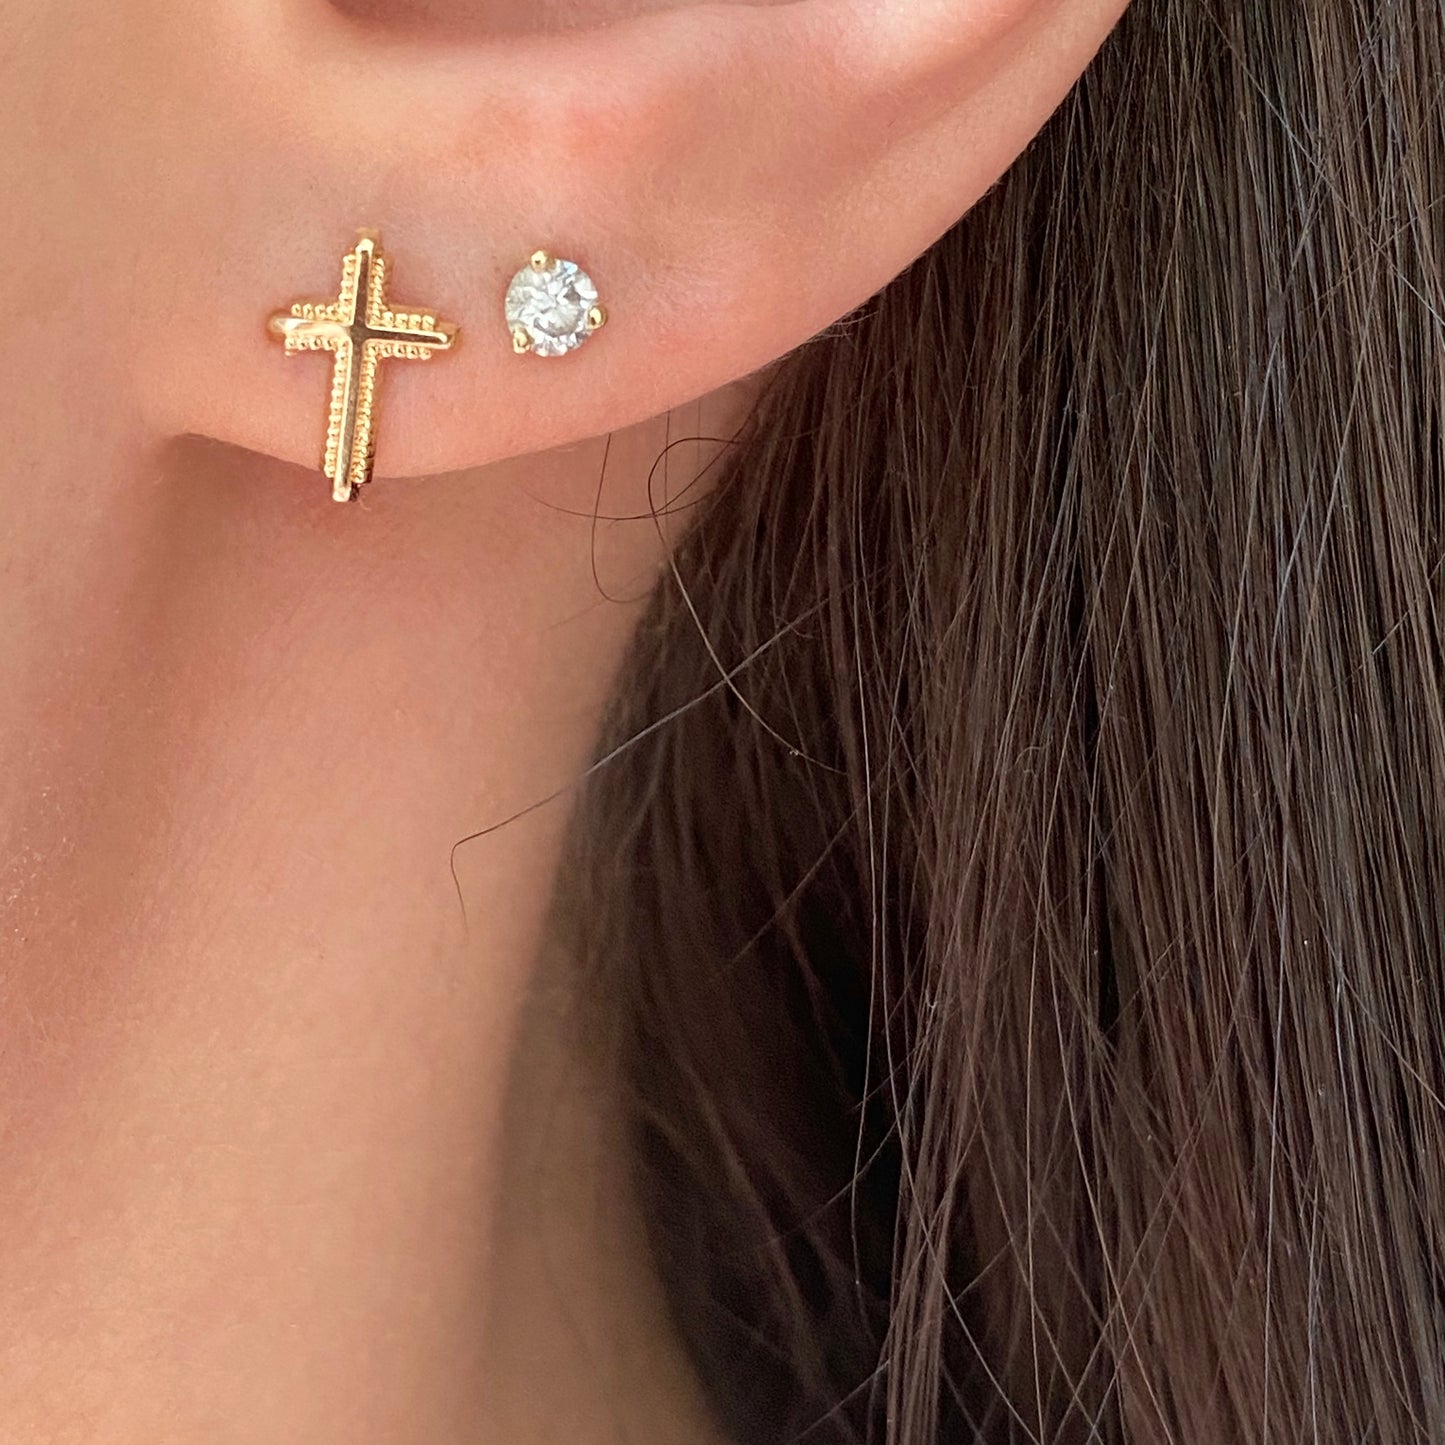 14KT Yellow Gold Bubbled Mini Cross Post Stud Earrings, 14KT Yellow Gold Bubbled Mini Cross Post Stud Earrings - Legacy Saint Jewelry